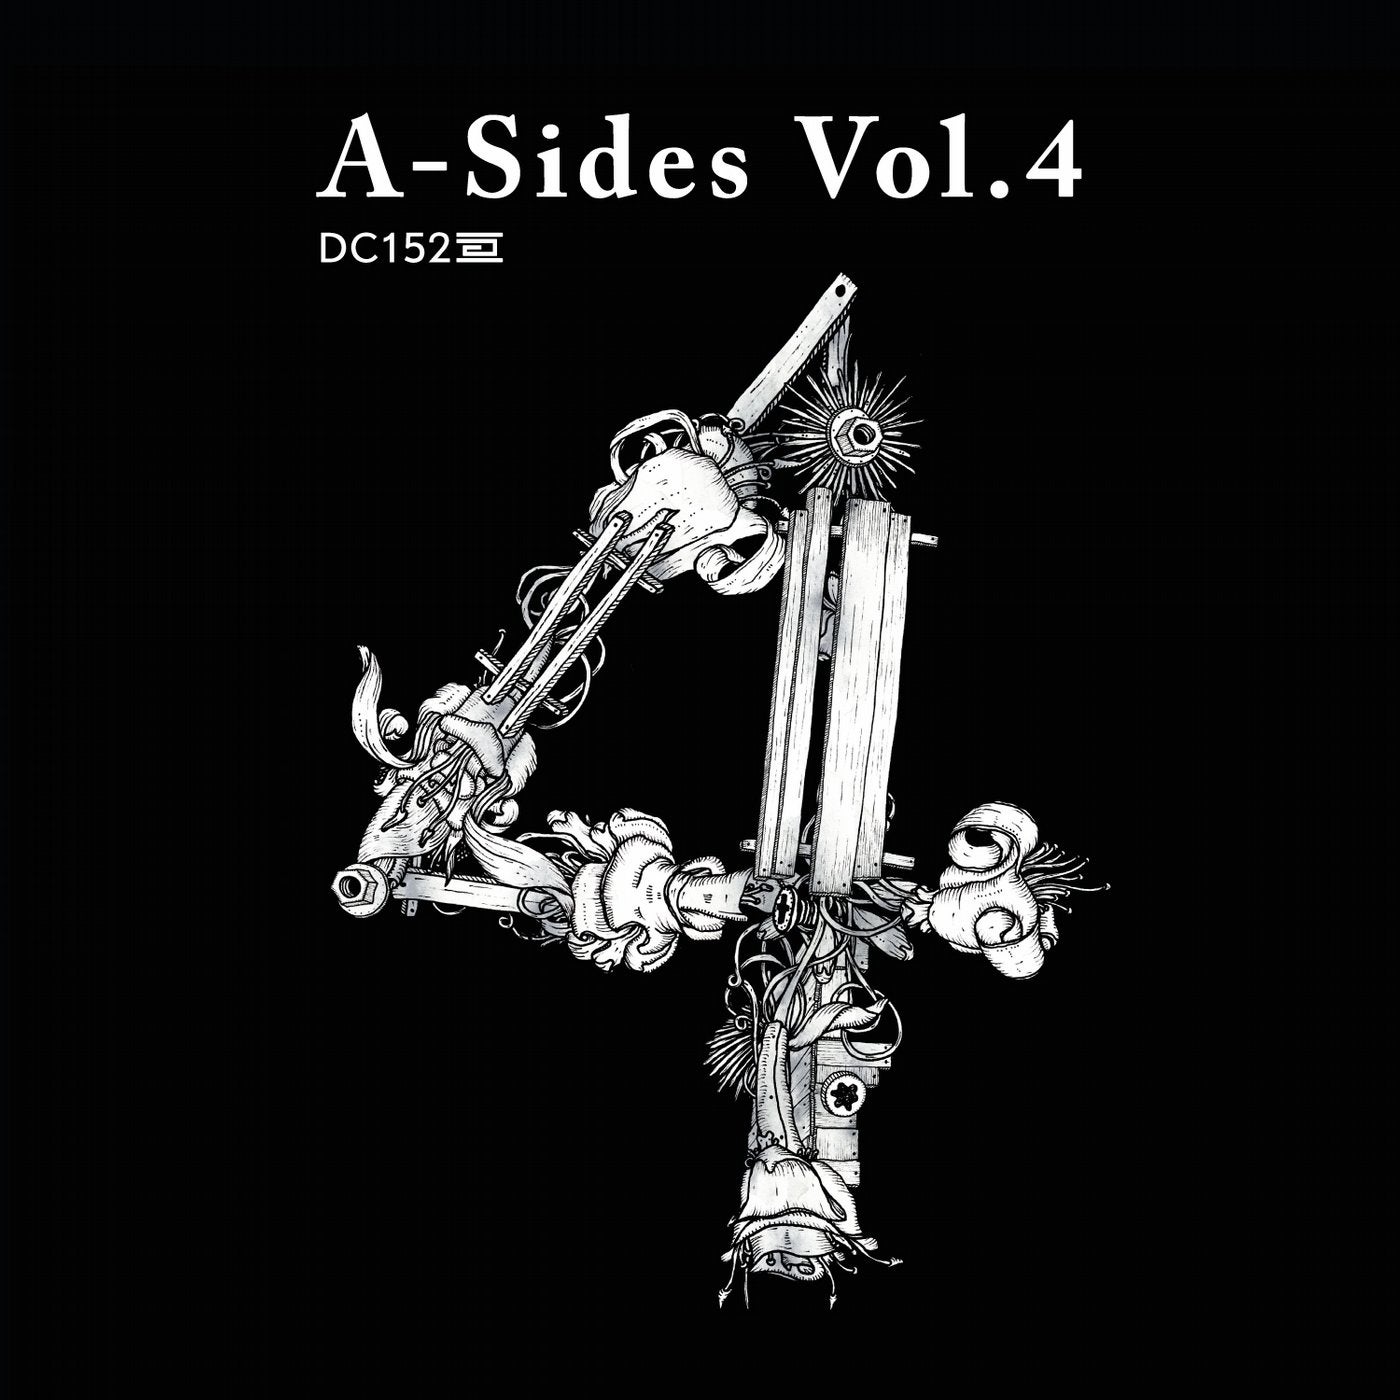 A-sides Volume 4